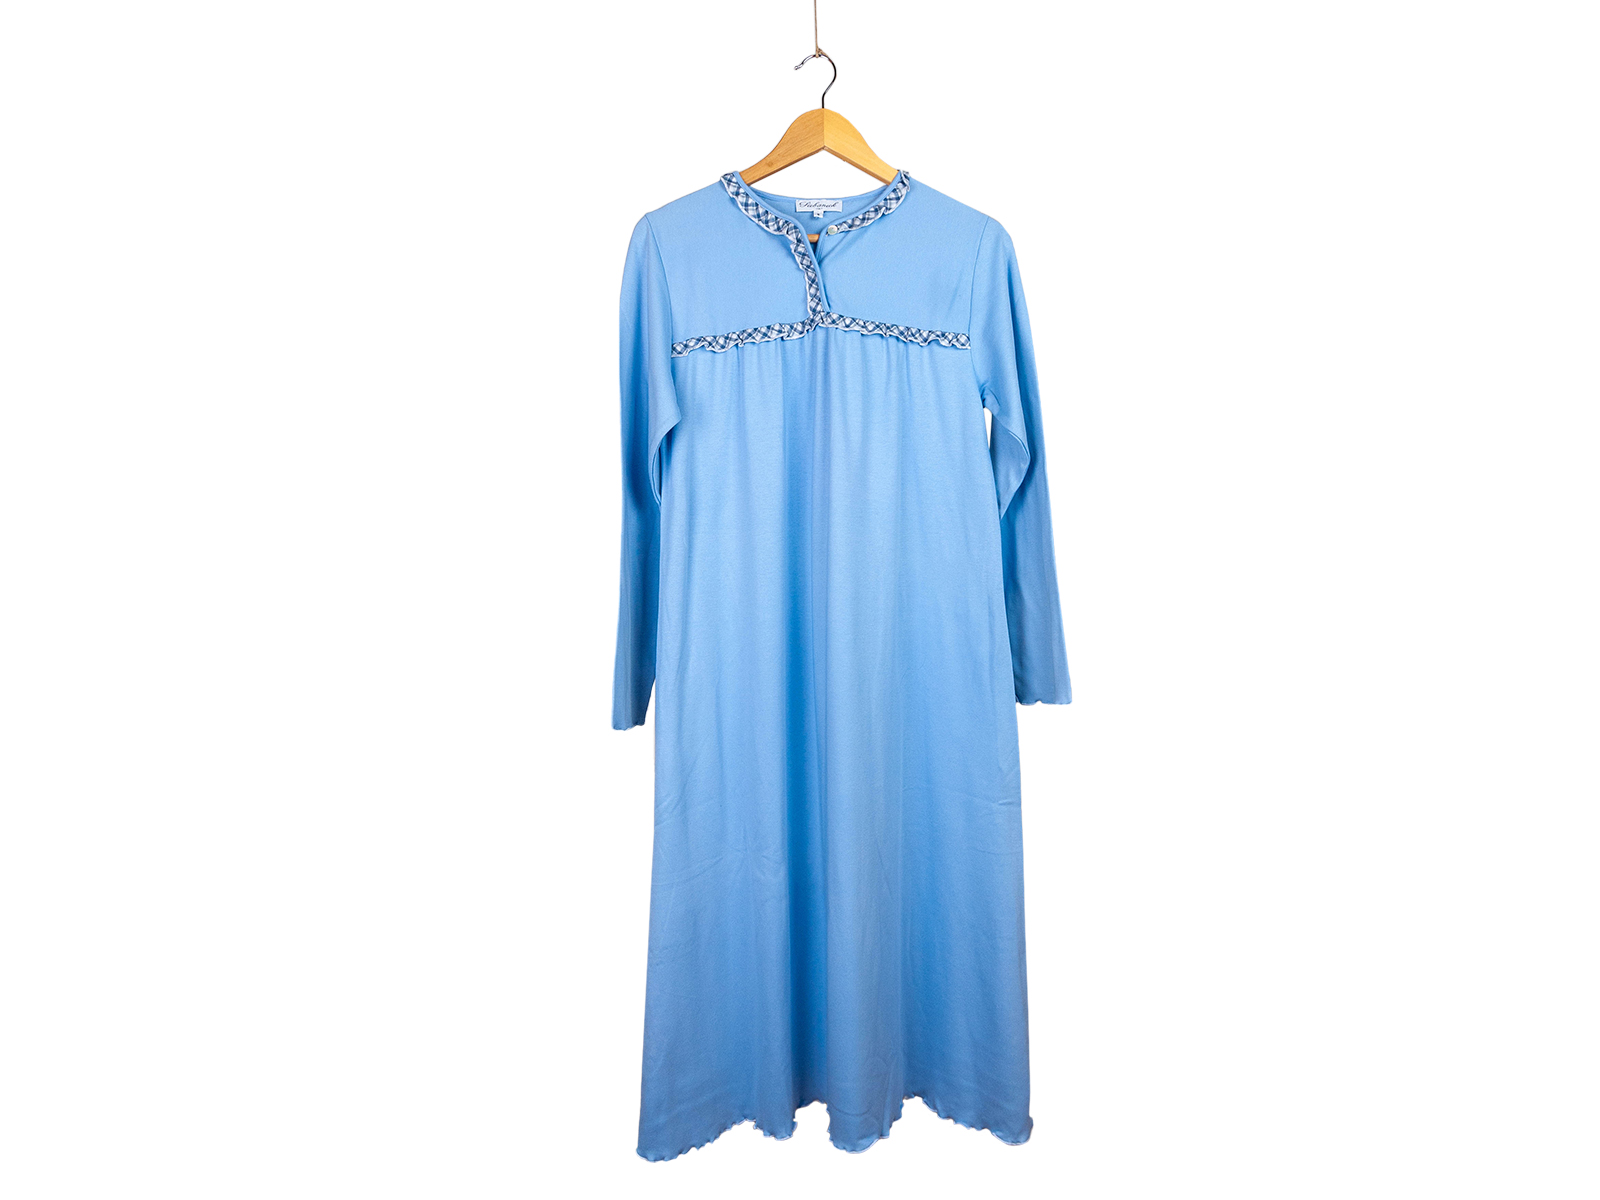 Siebaneck, i pigiami artigianali italiani: - donna - mod. 100 azzurro